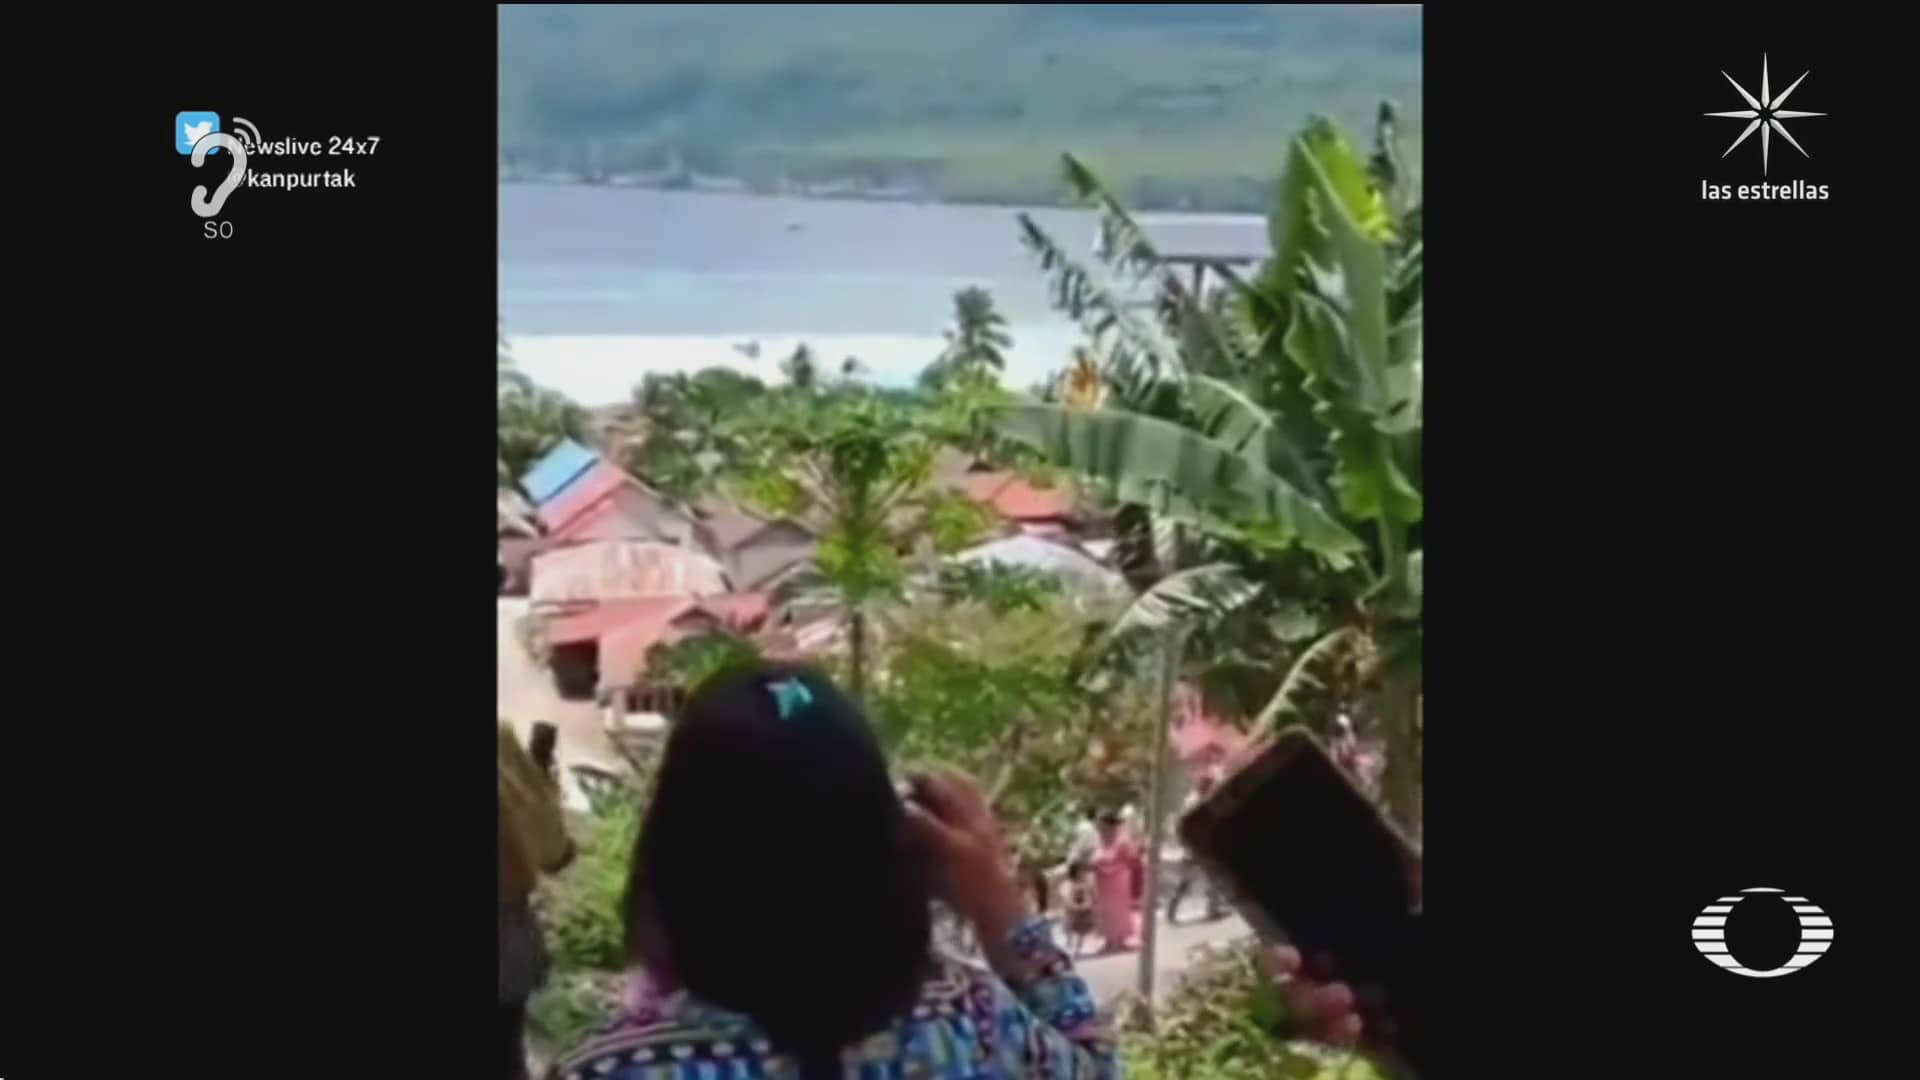 terremoto sacude indonesia